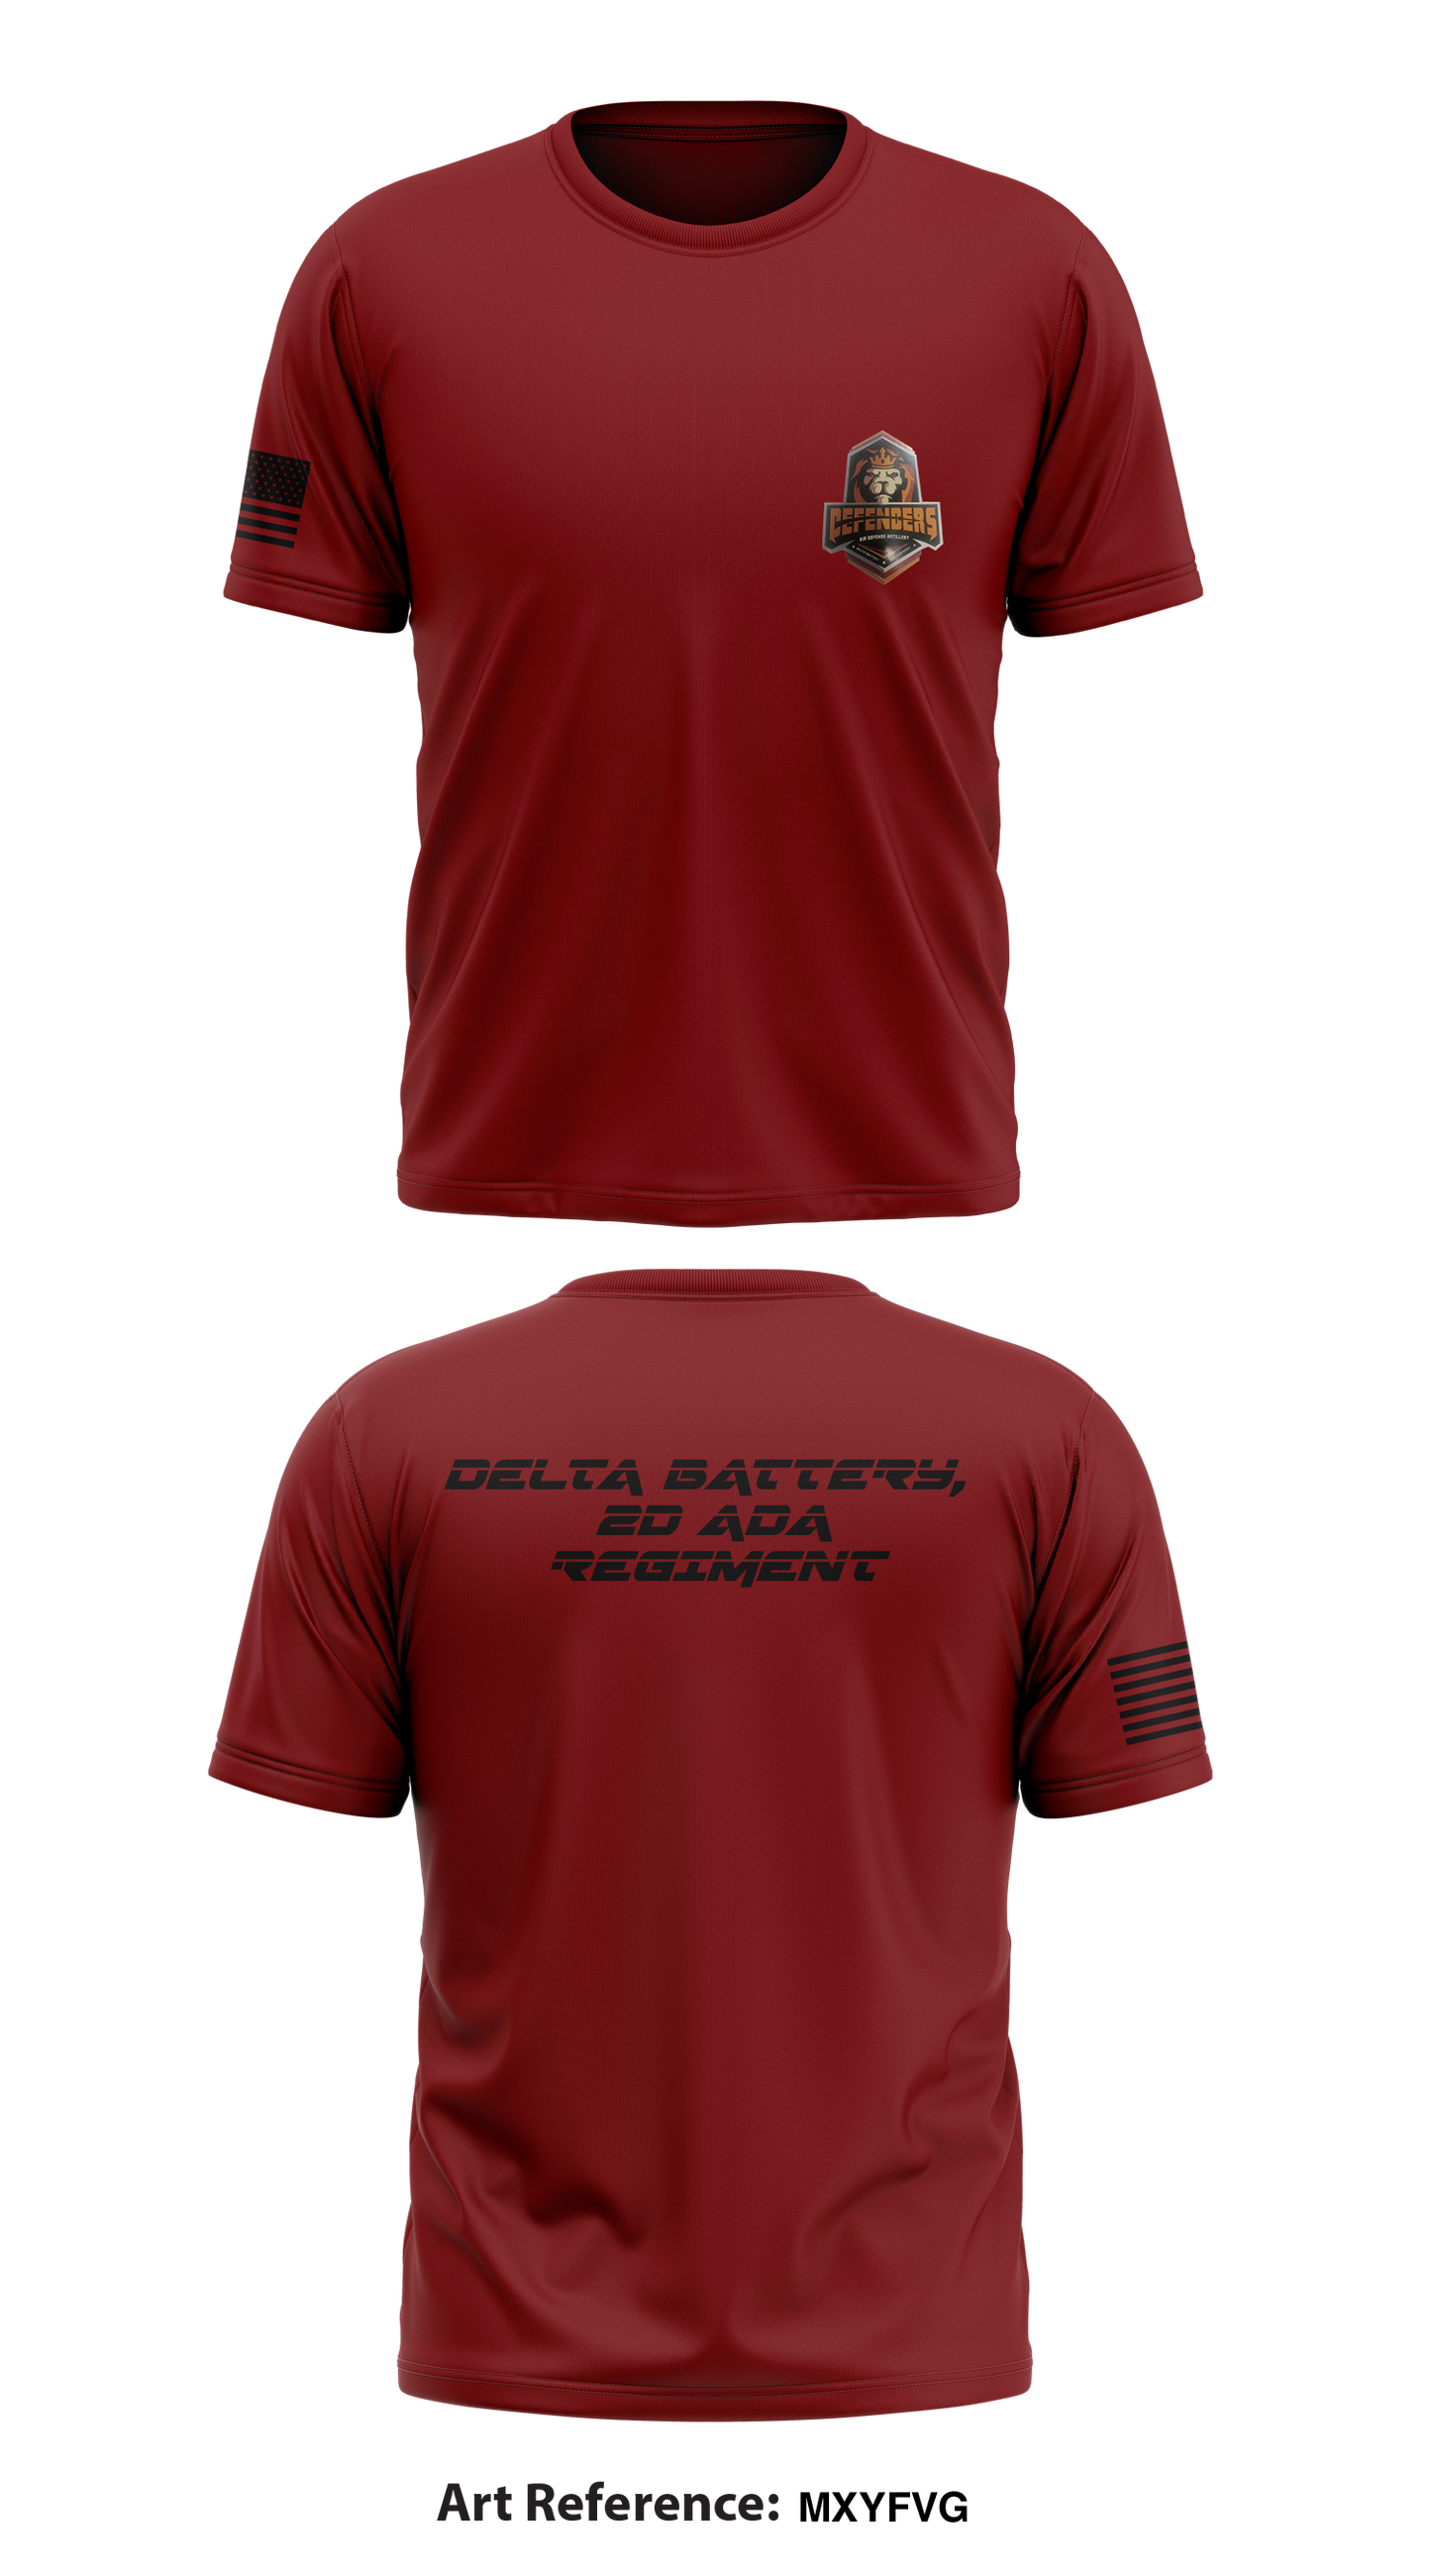 Delta Battery, 2D ADA Regiment Store 1 Core Men's SS Performance Tee - mXyFVG